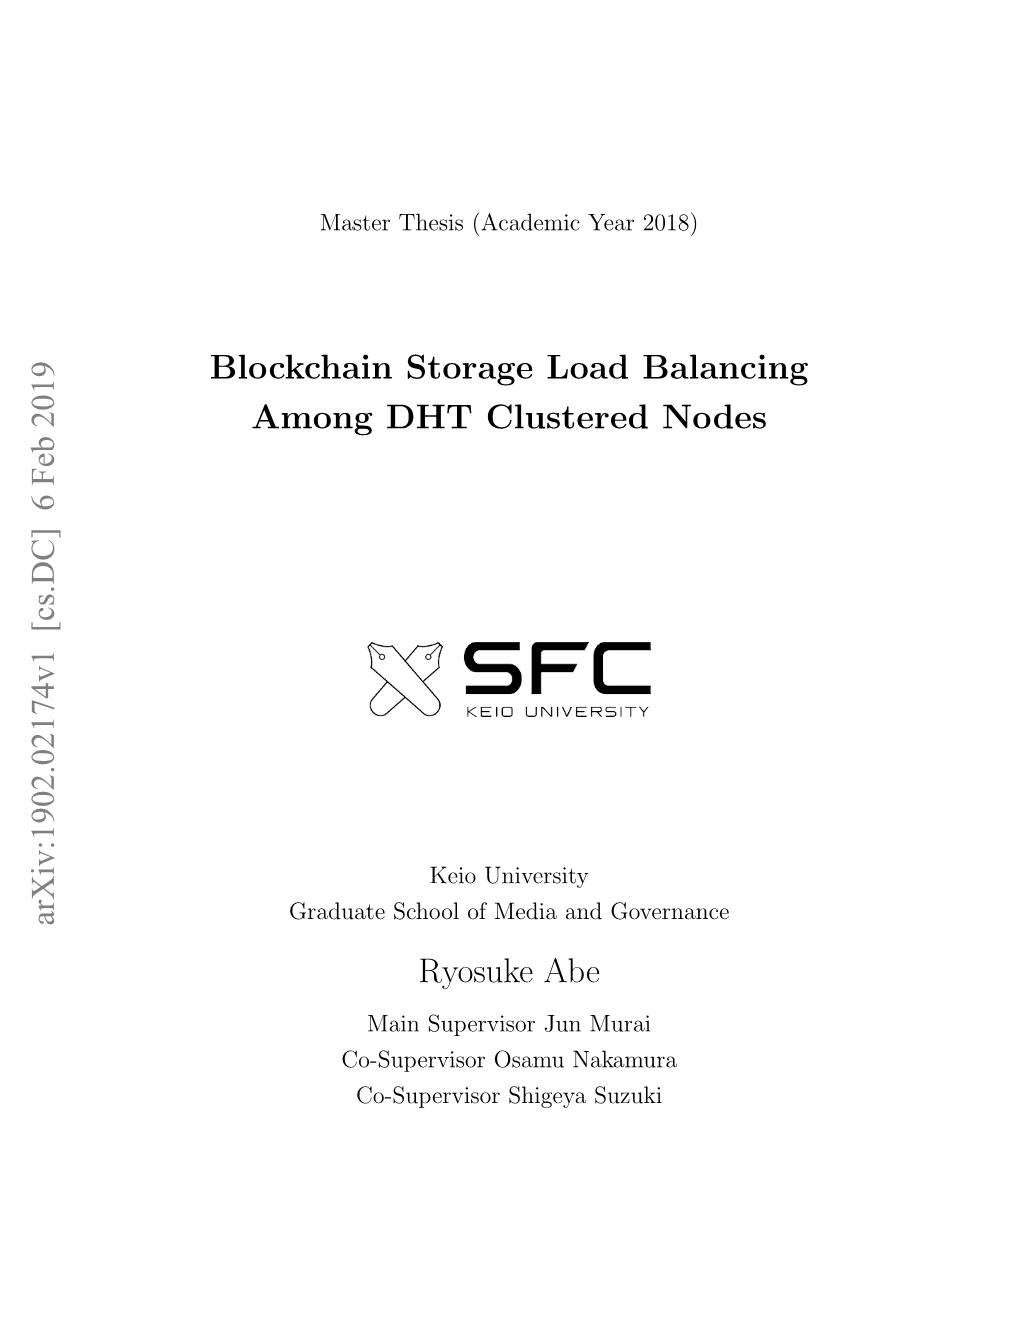 Blockchain Storage Load Balancing Among DHT Clustered Nodes